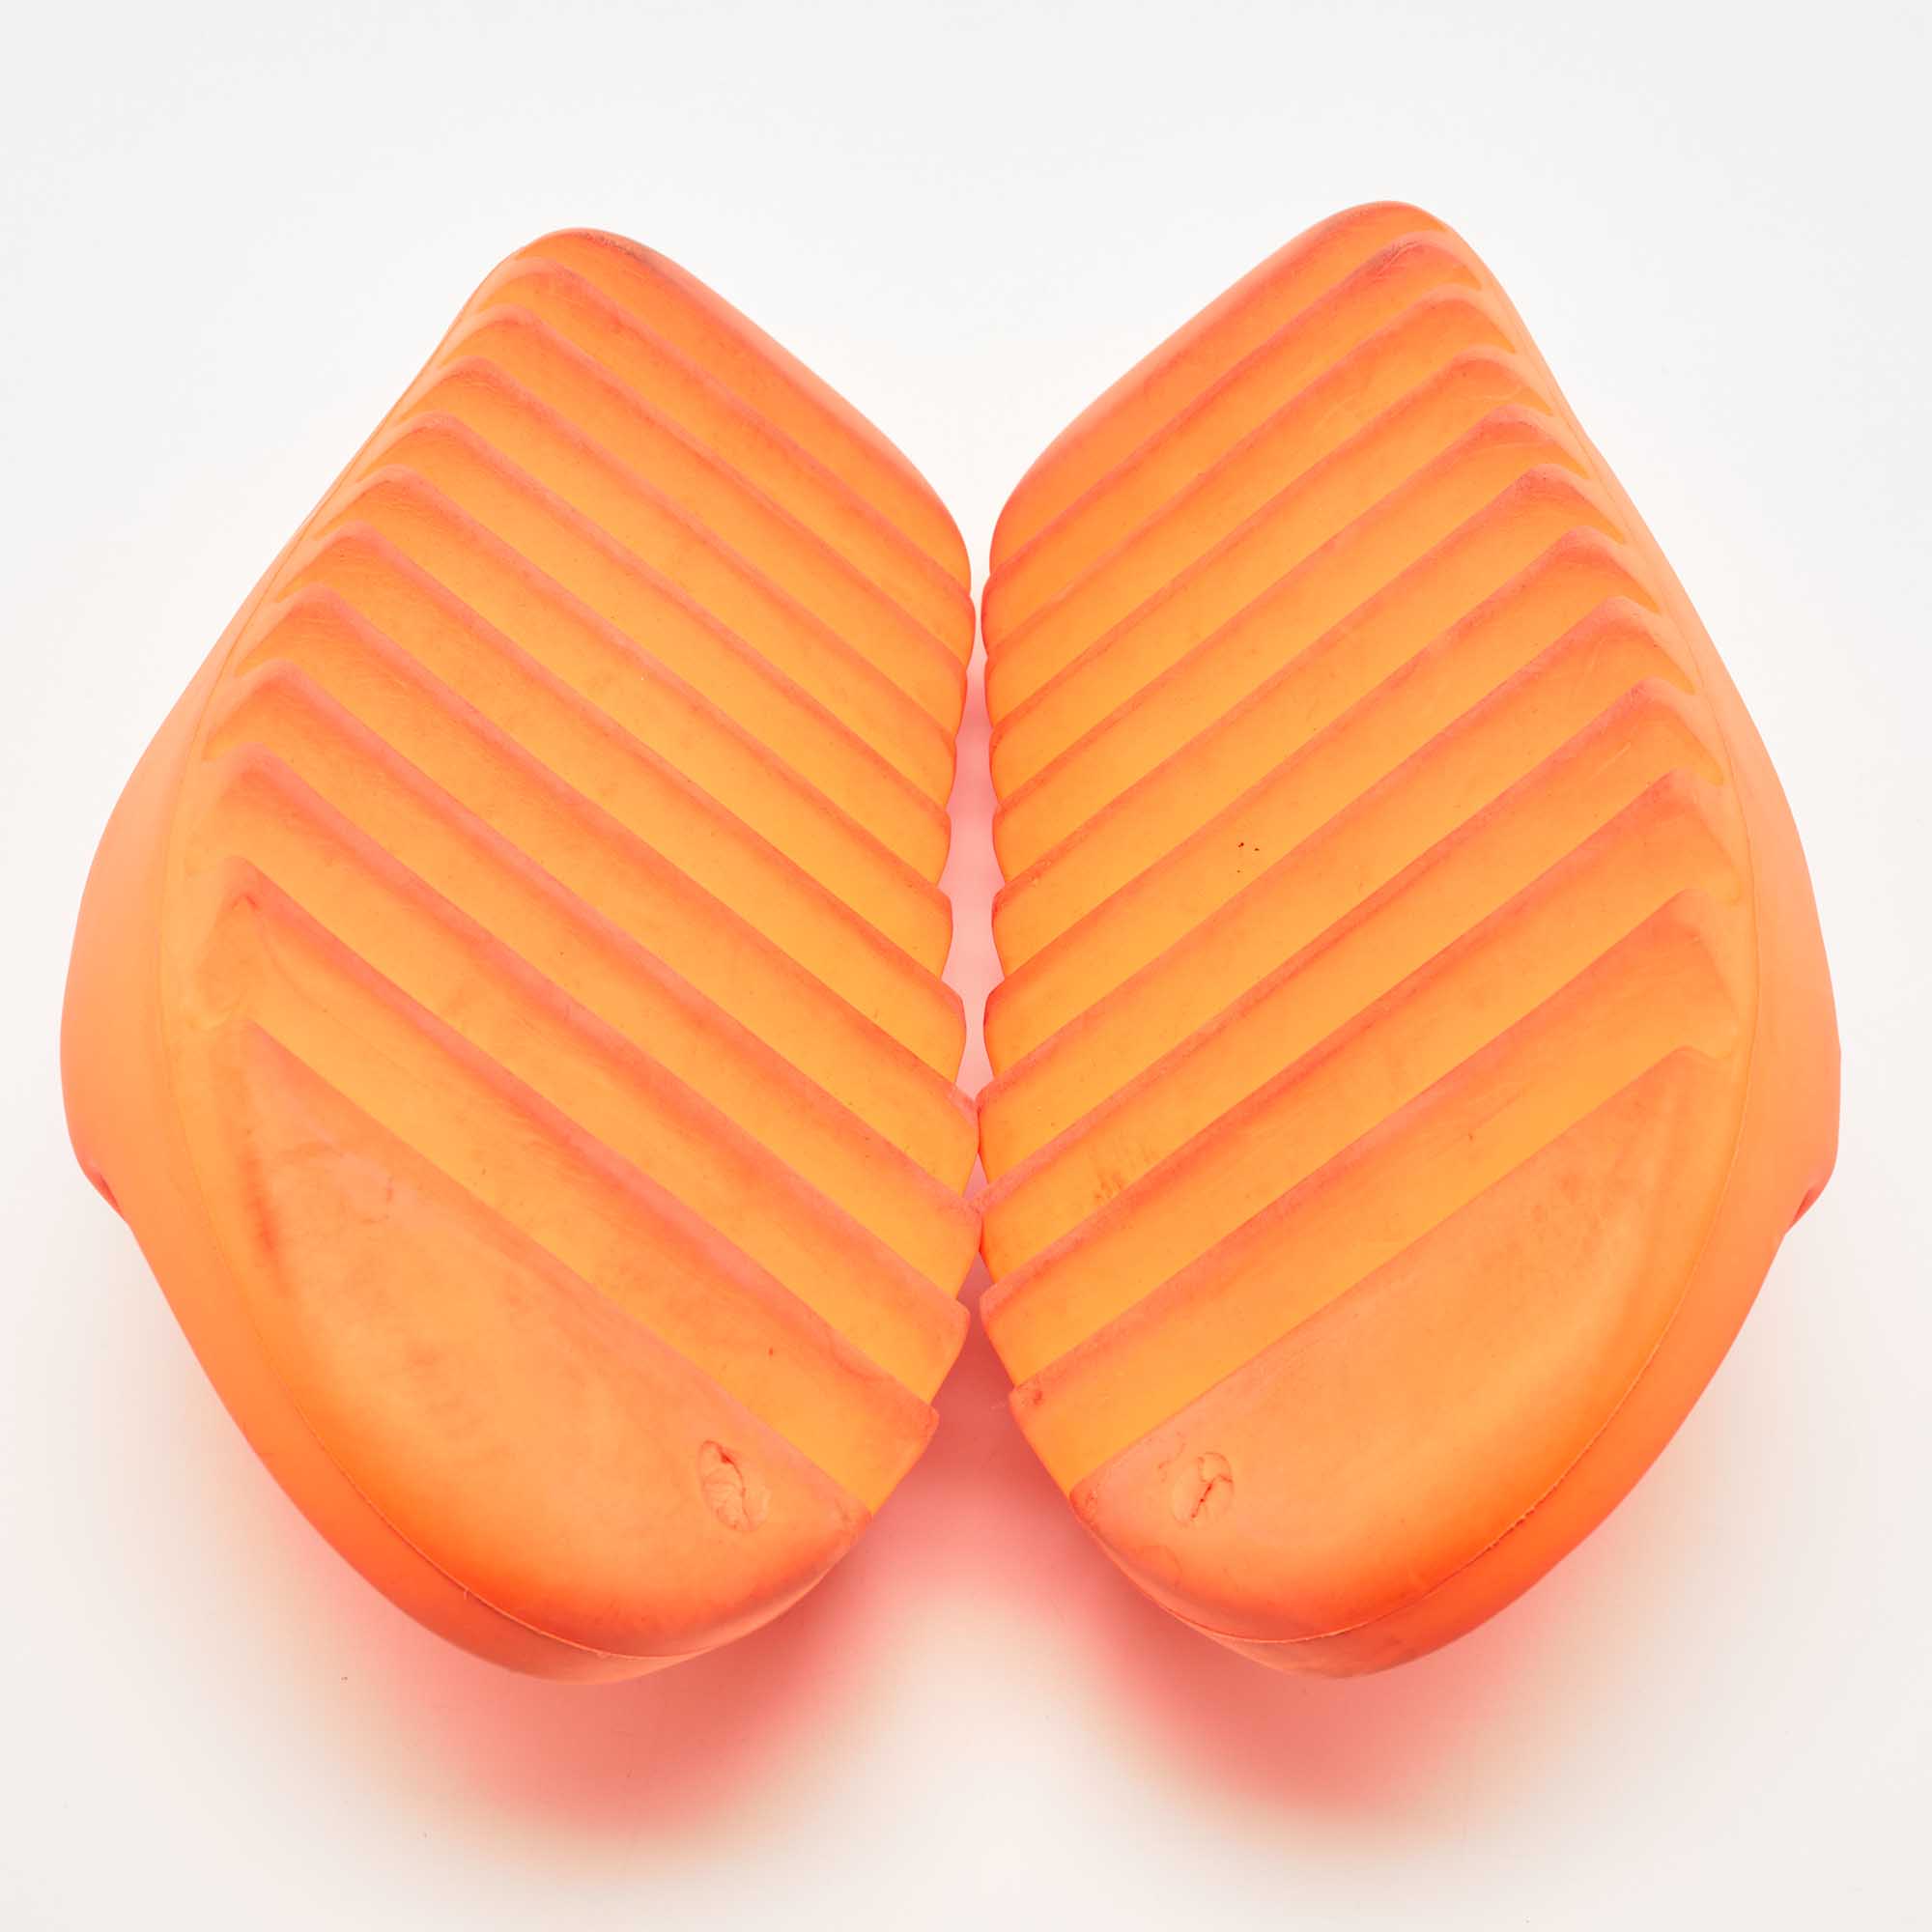 Yeezy X Adidas Orange Rubber Enflame Slides Size 45 1/3